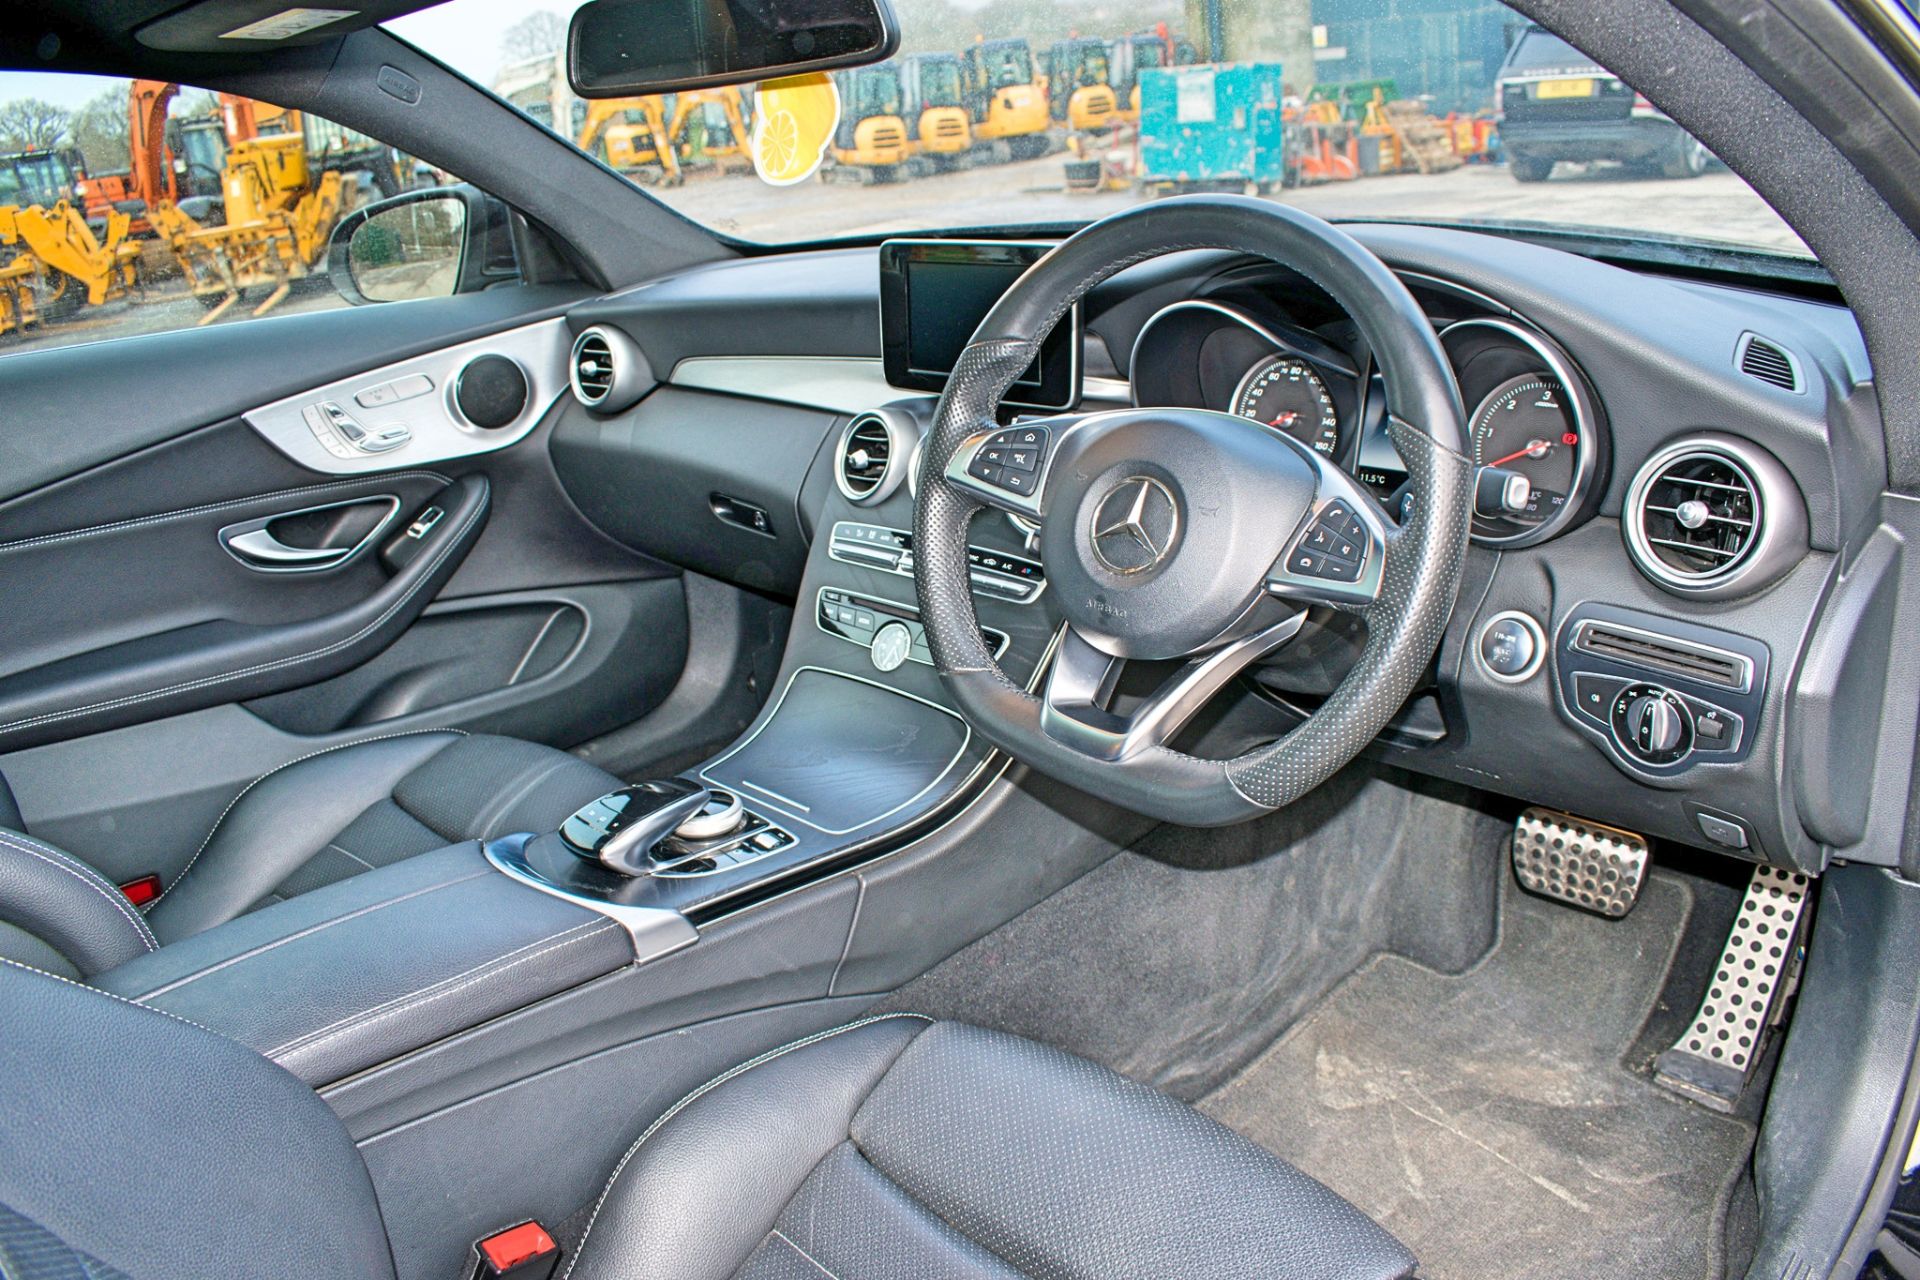 Mercedes Benz C220d AMG Line Premium 2 door coupe car Registration Number: DG16 XKD Date of - Image 8 of 11